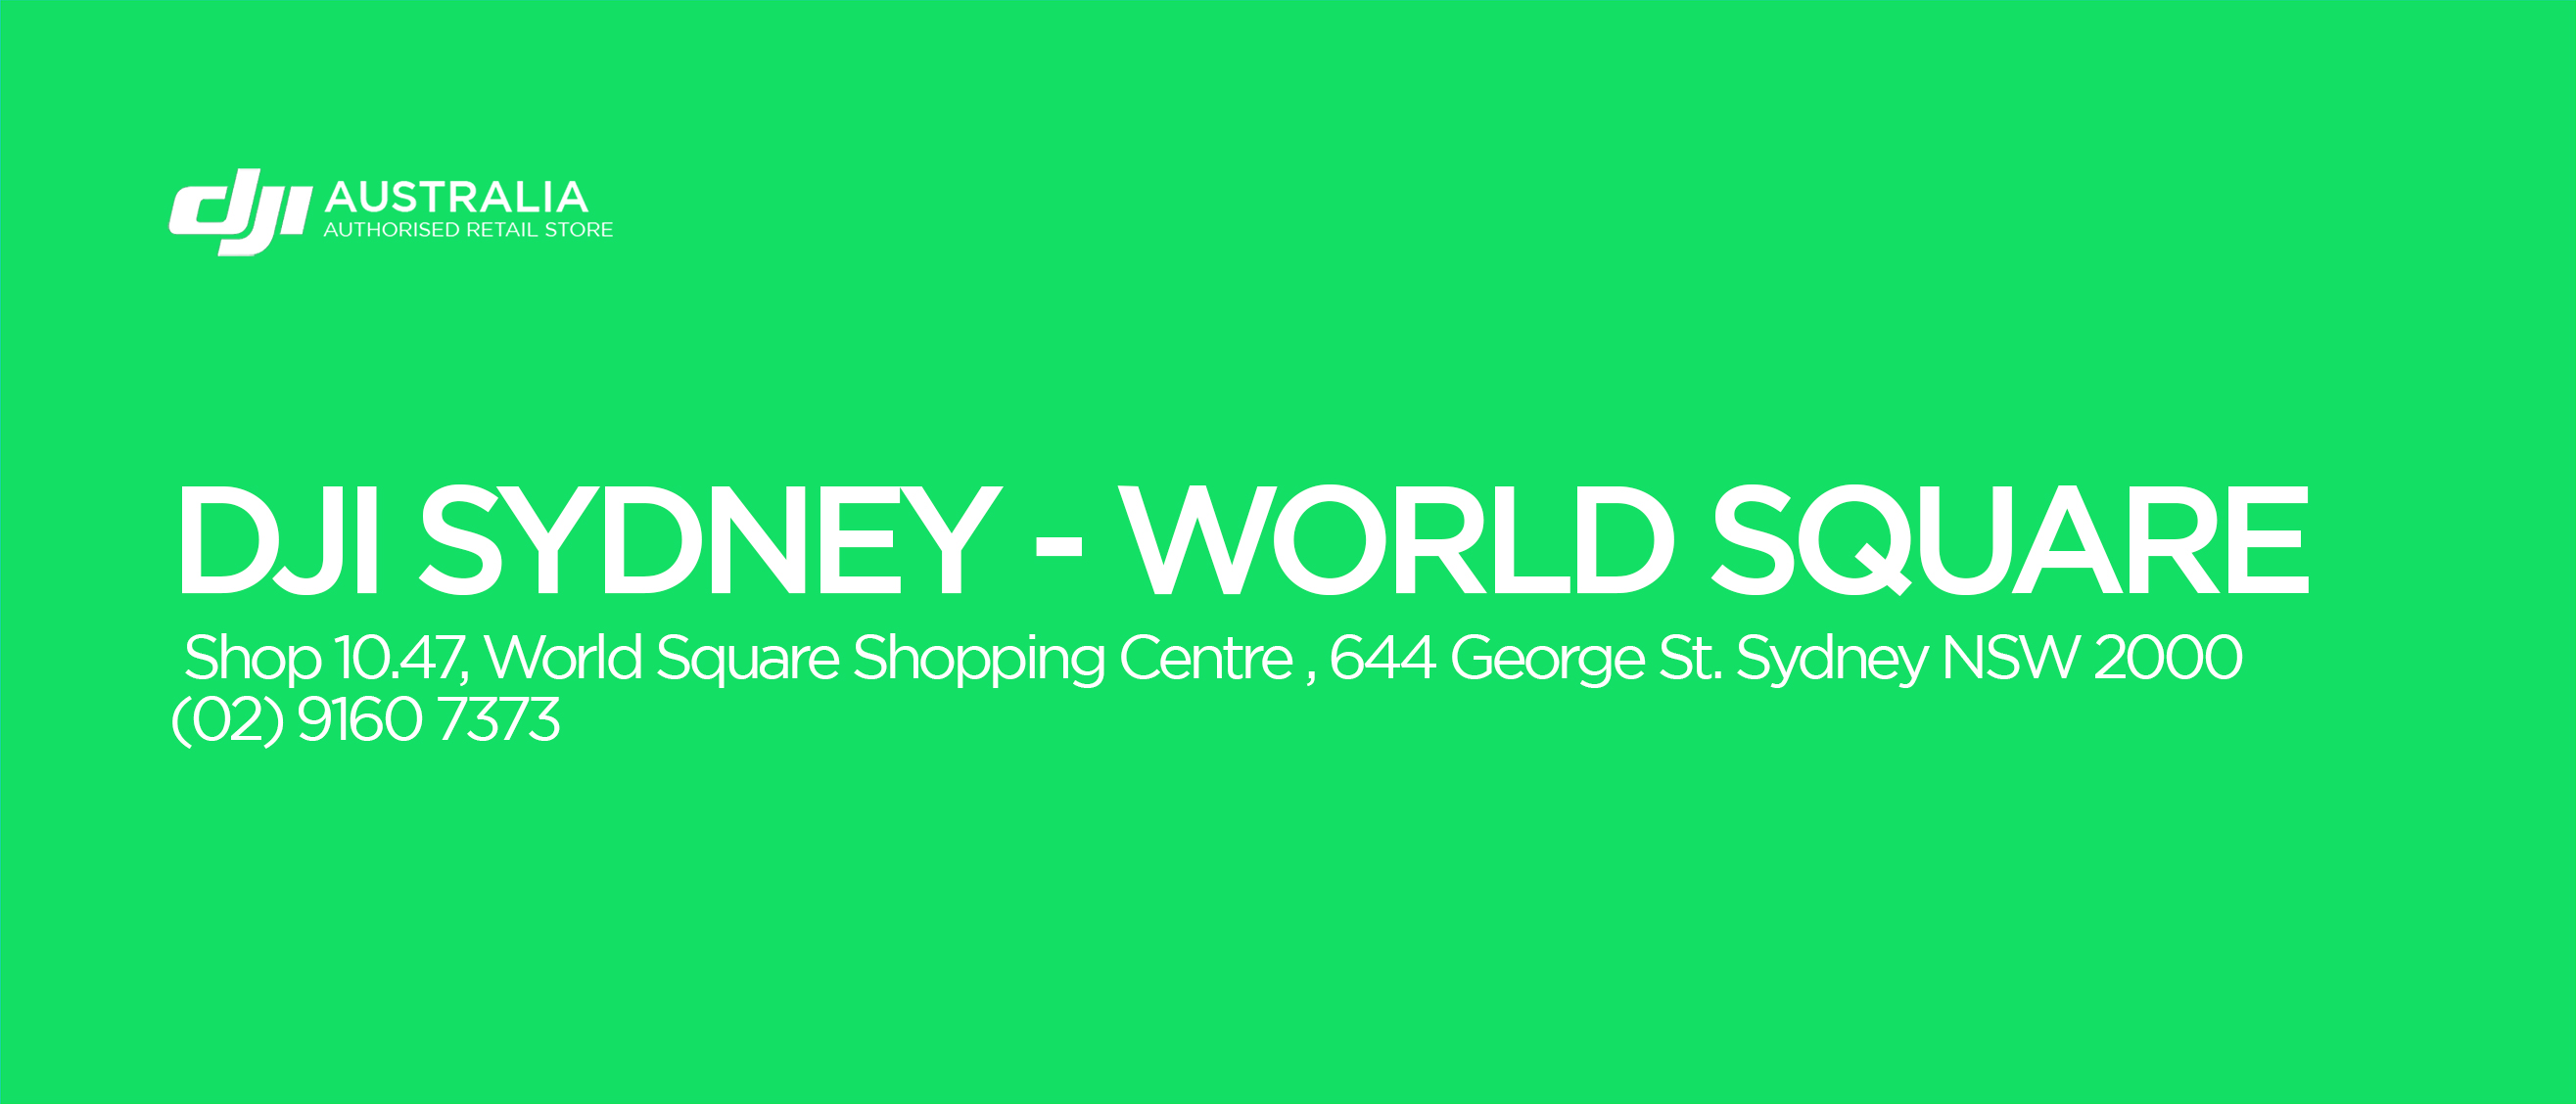 D1 Sydney (World Square) Grand Opening-21-12-2018